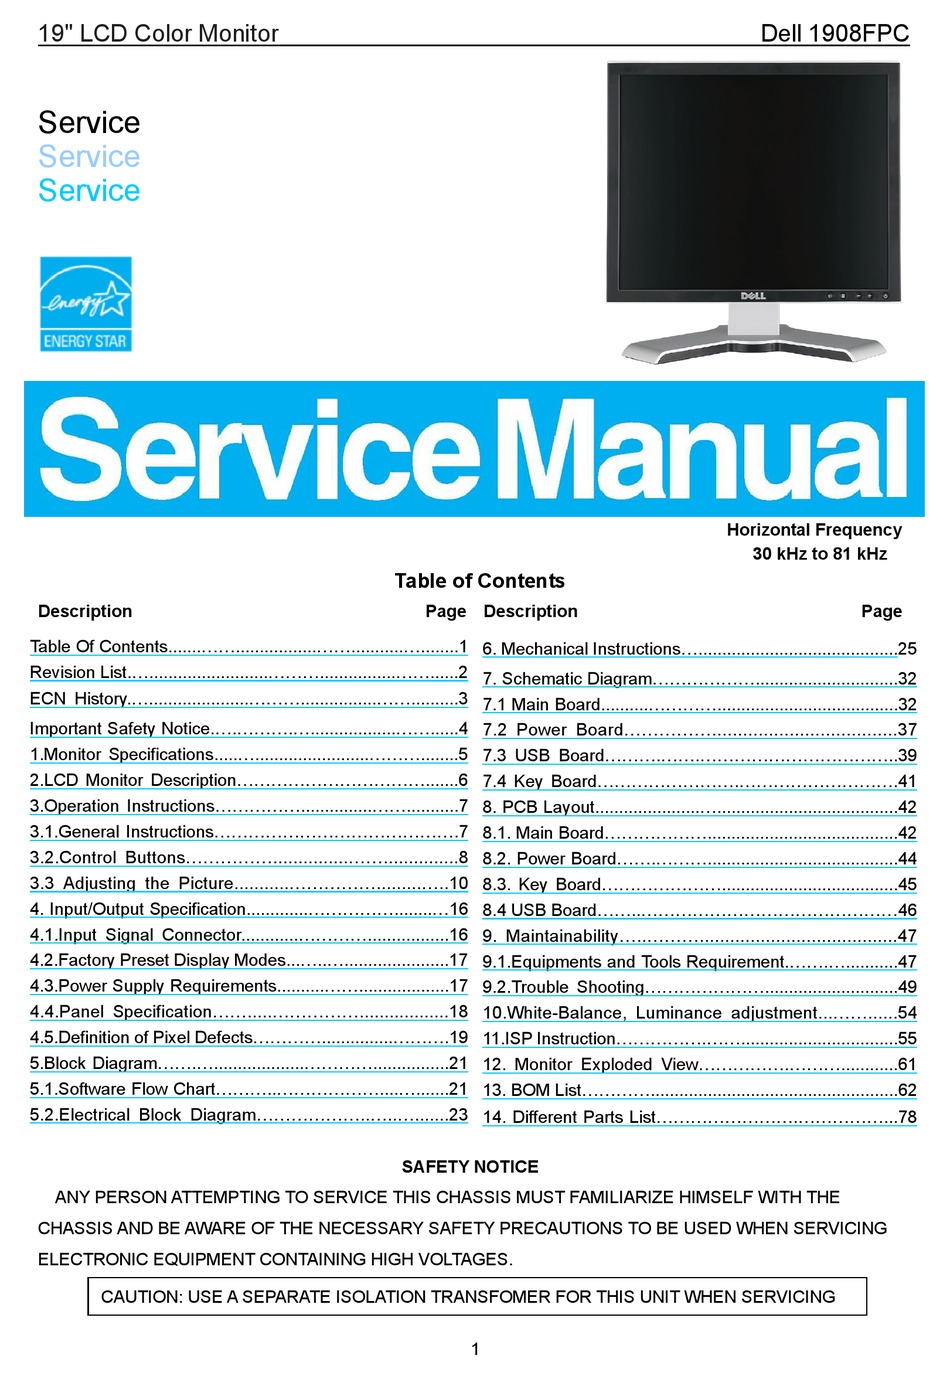 Dell 1908fpc Service Manual Pdf Download Manualslib